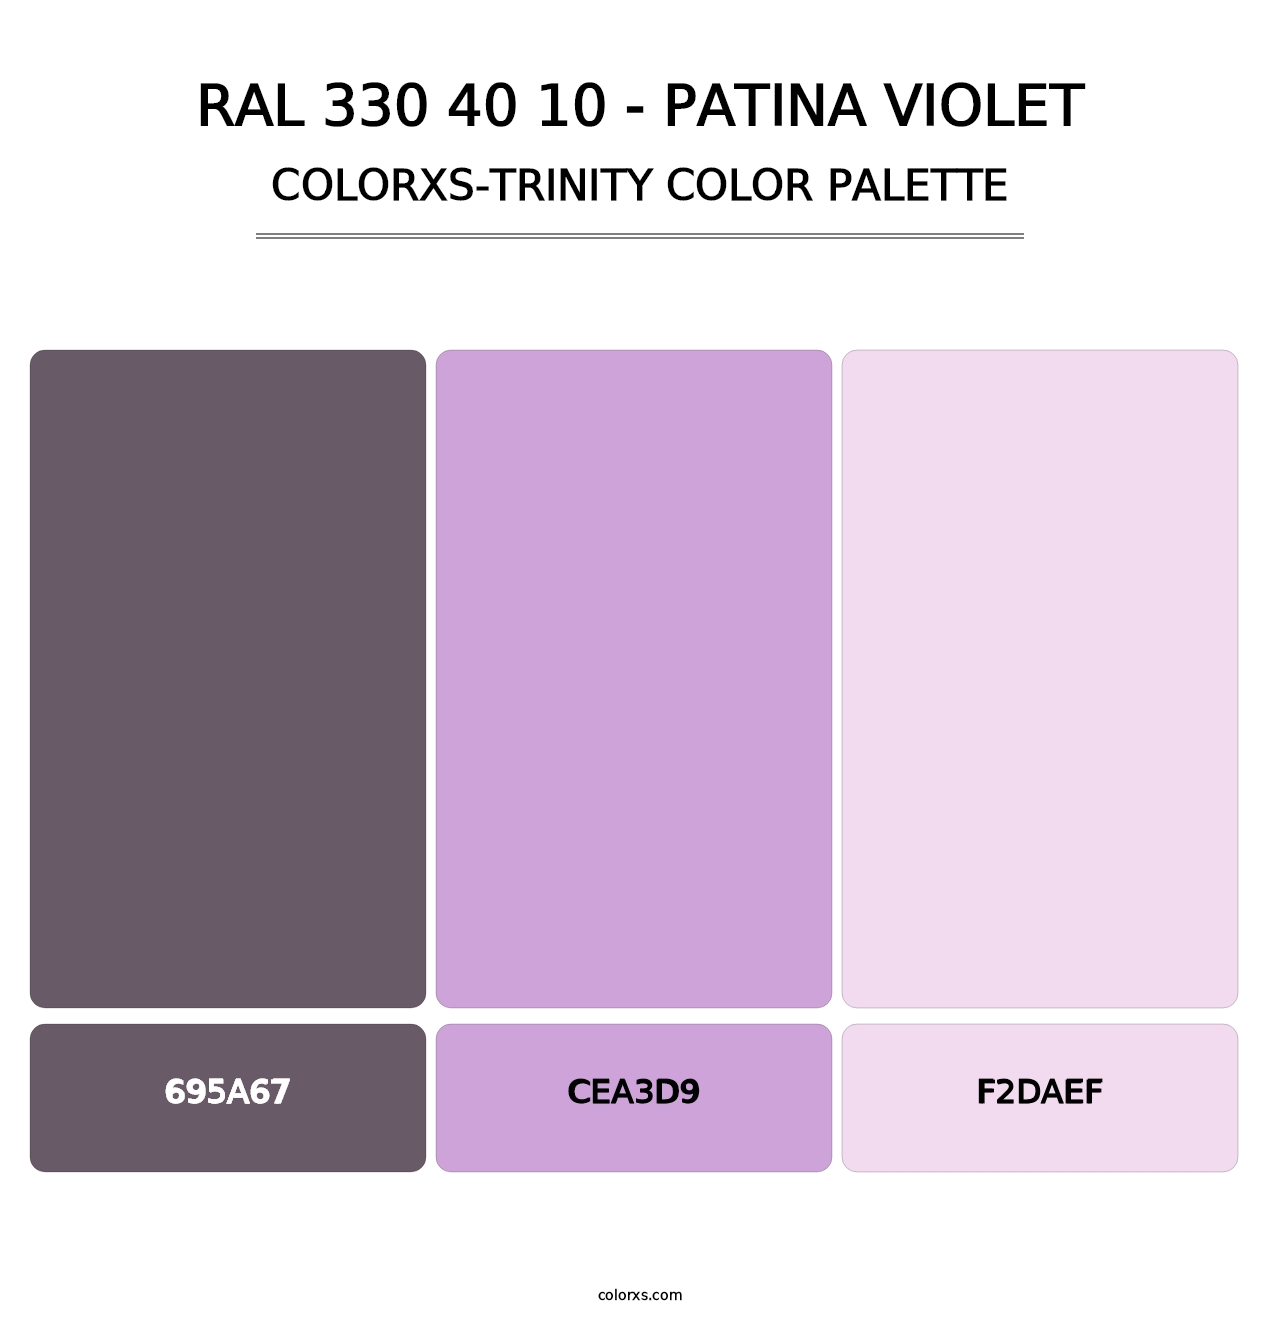 RAL 330 40 10 - Patina Violet - Colorxs Trinity Palette